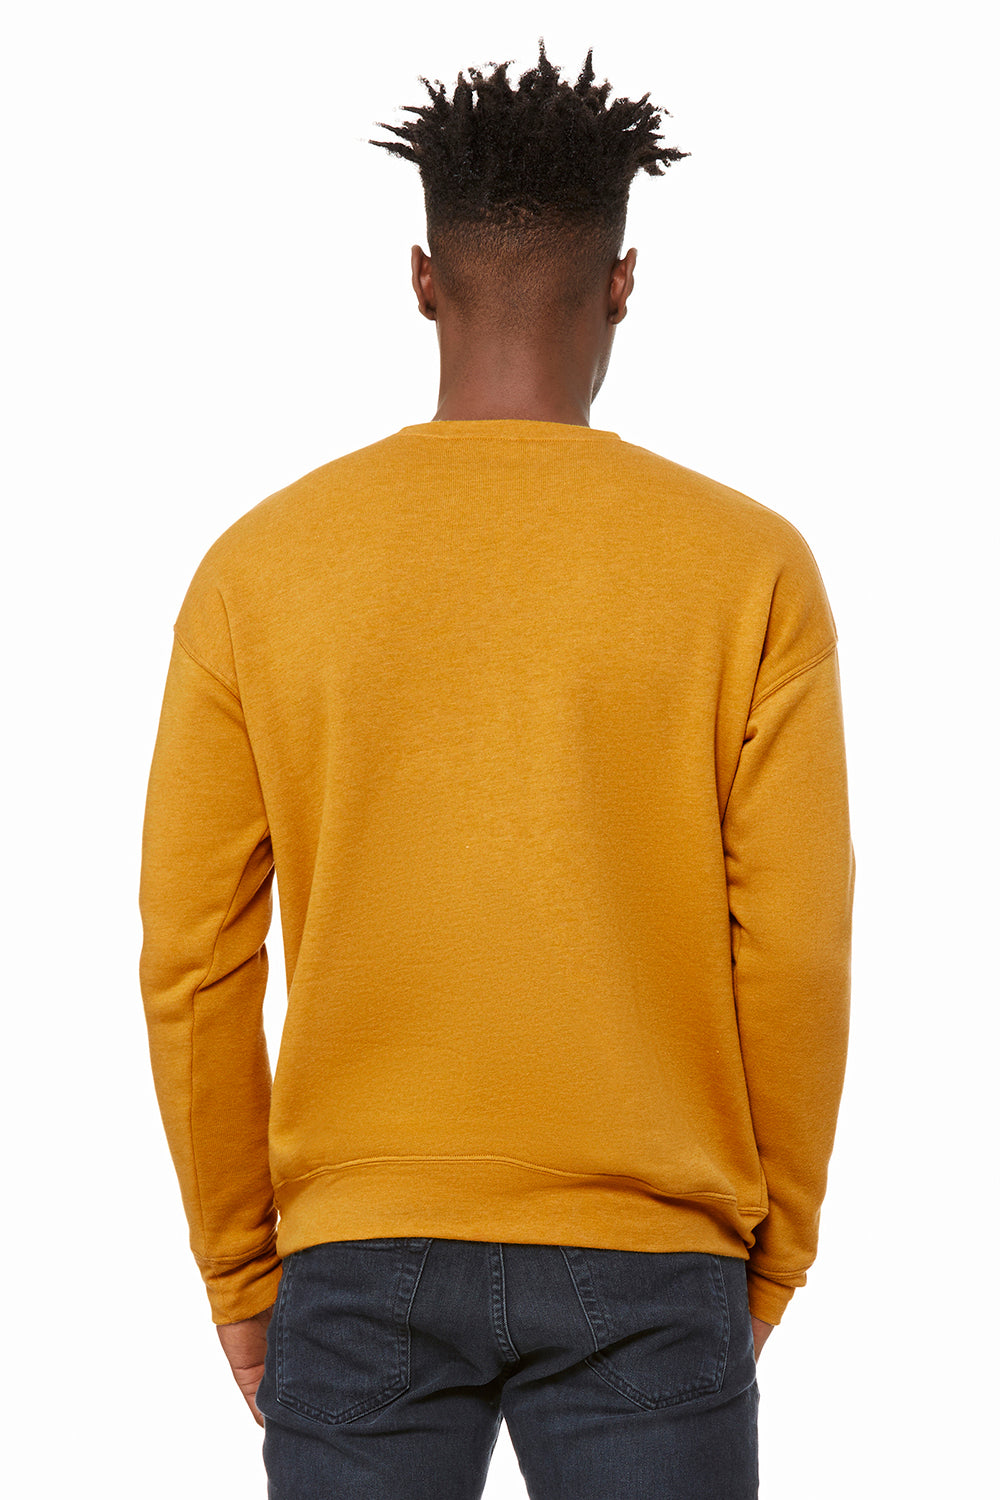 Bella + Canvas BC3945/3945 Mens Fleece Crewneck Sweatshirt Heather Mustard Yellow Model Back